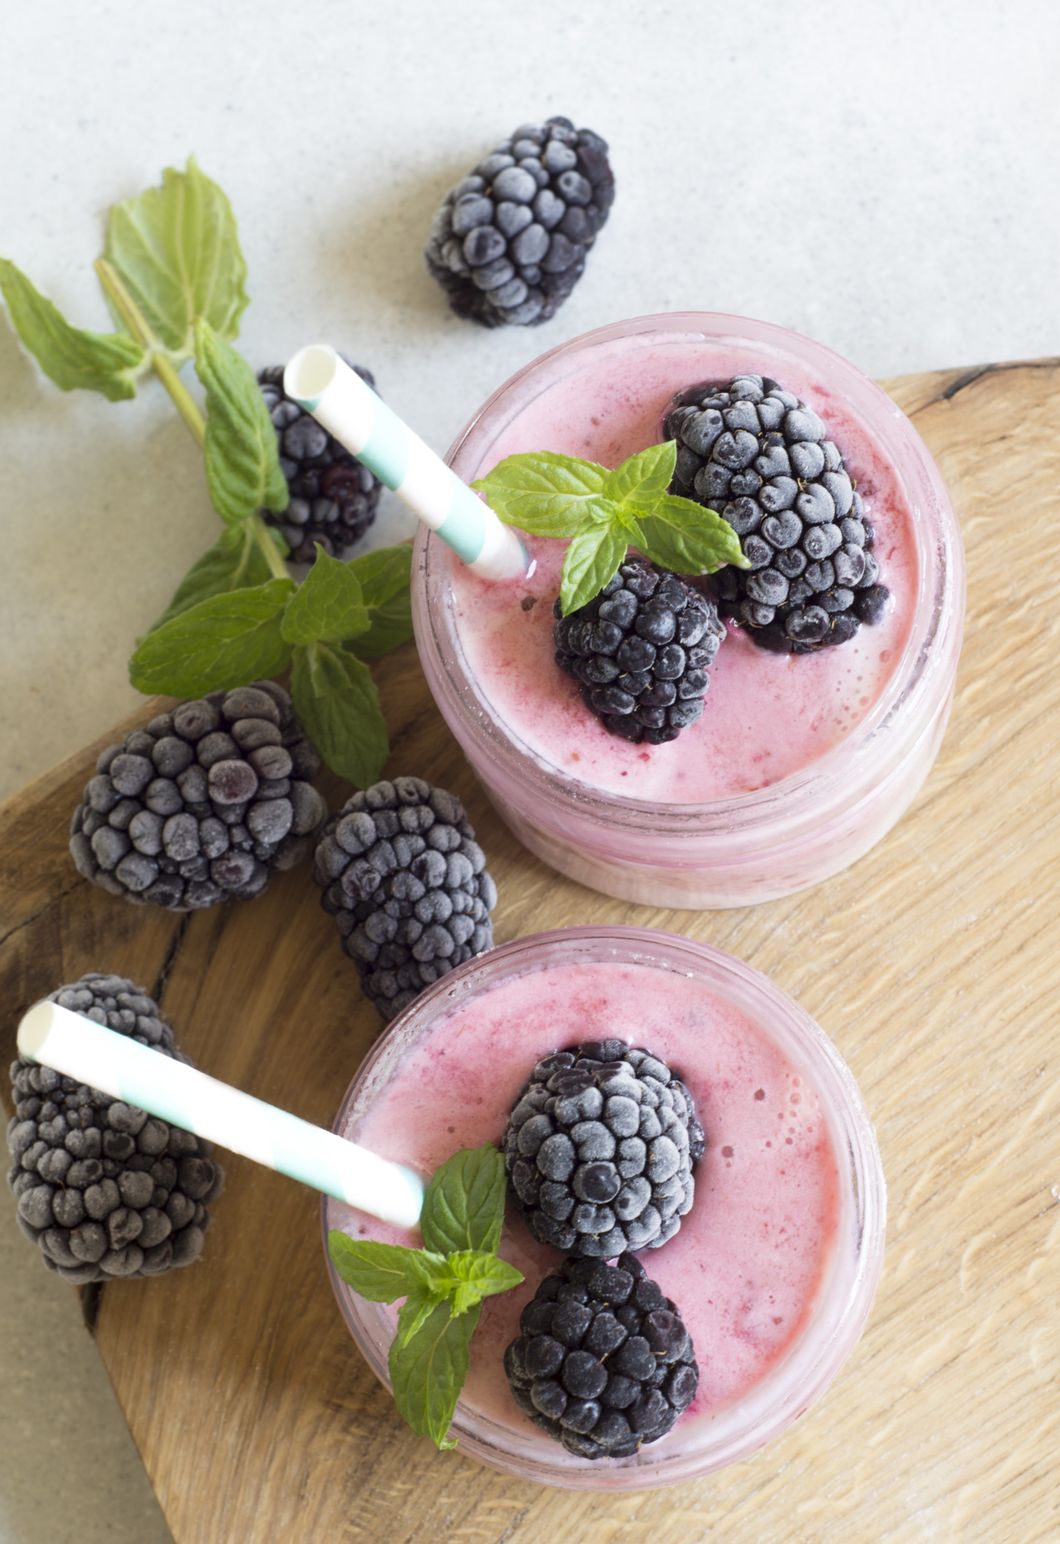 https://www.pexels.com/photo/berries-blackberries-close-up-cocktail-434295/